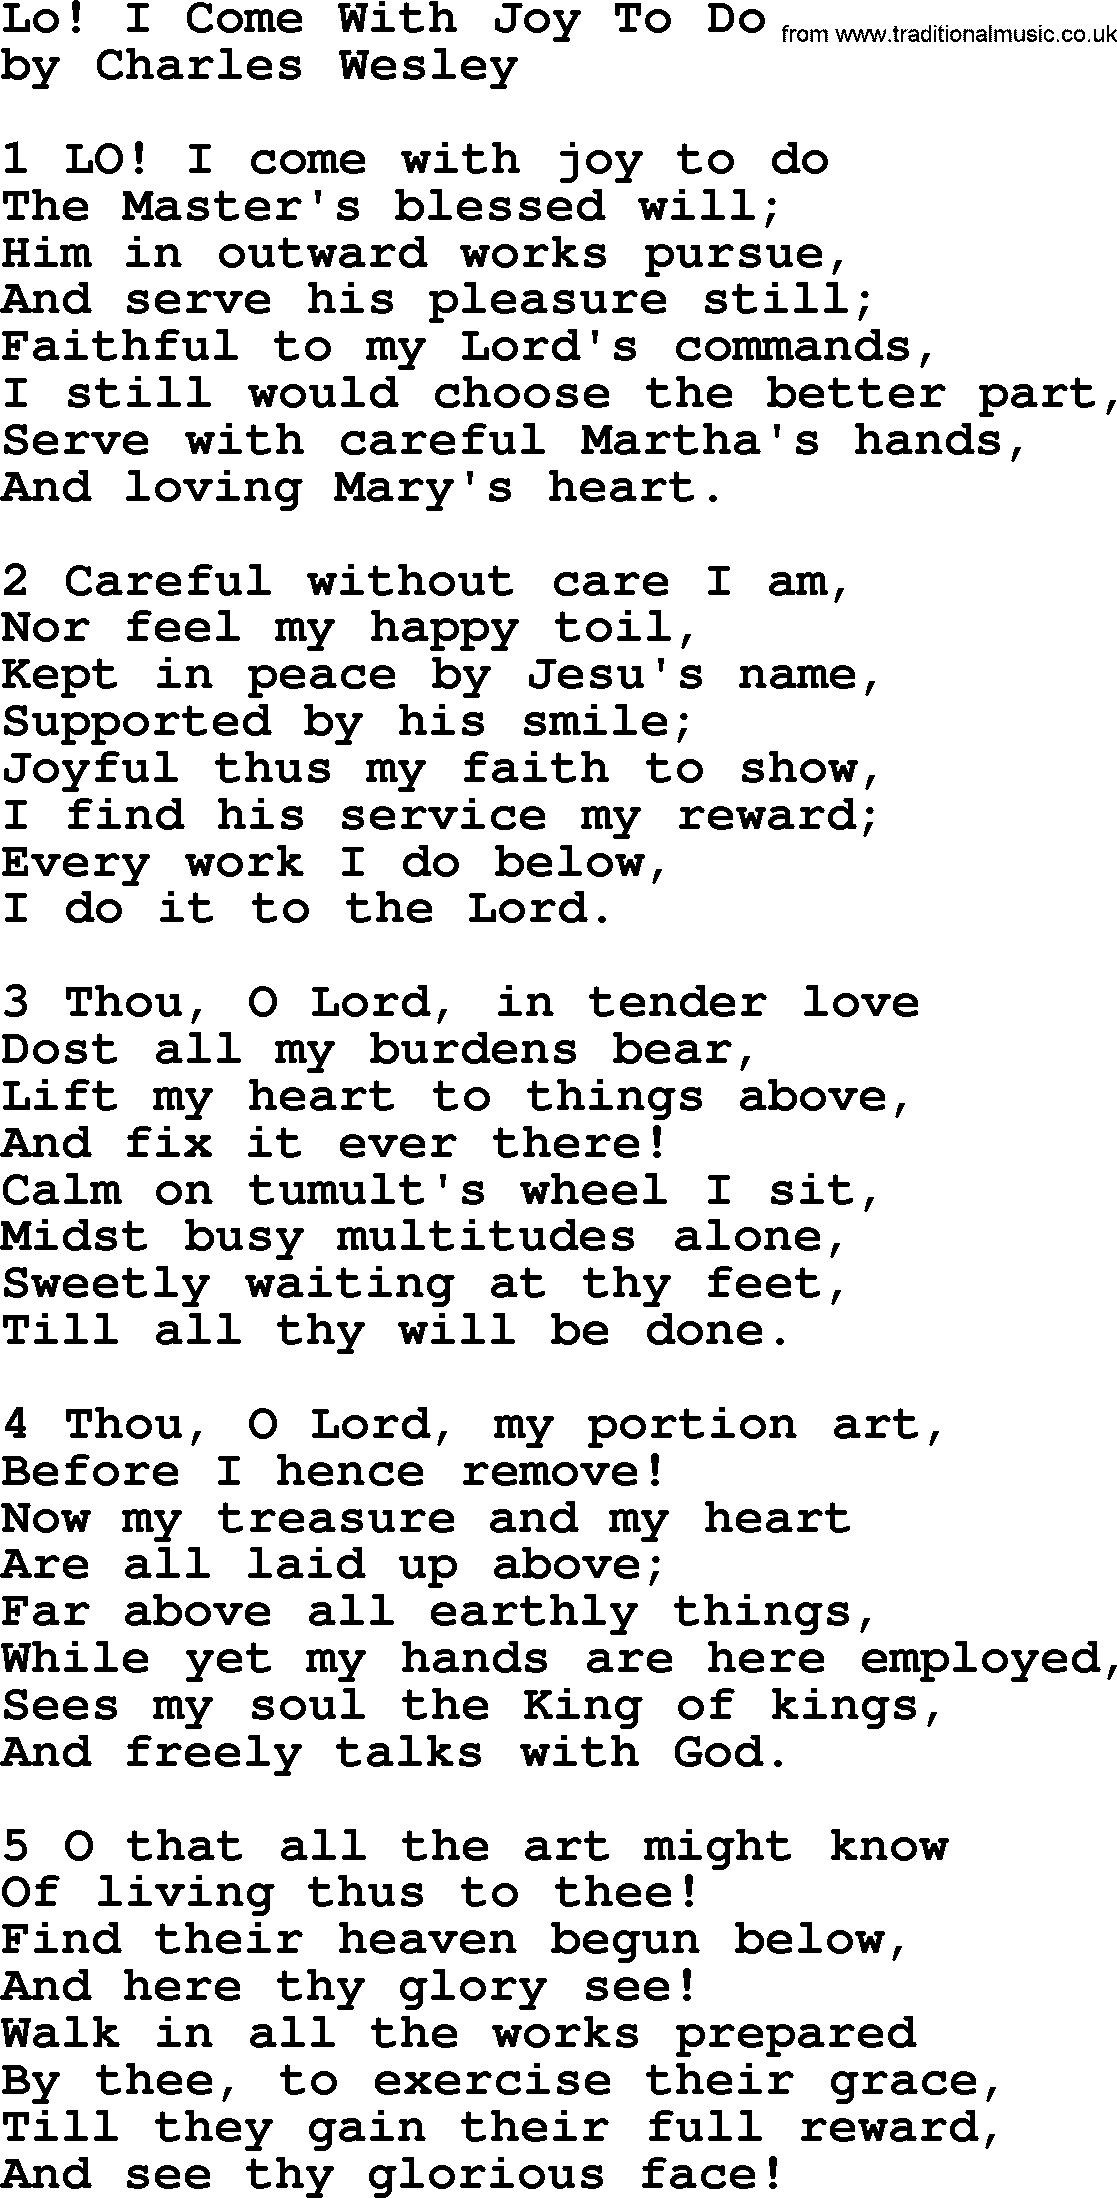 Charles Wesley hymn: Lo! I Come With Joy To Do, lyrics